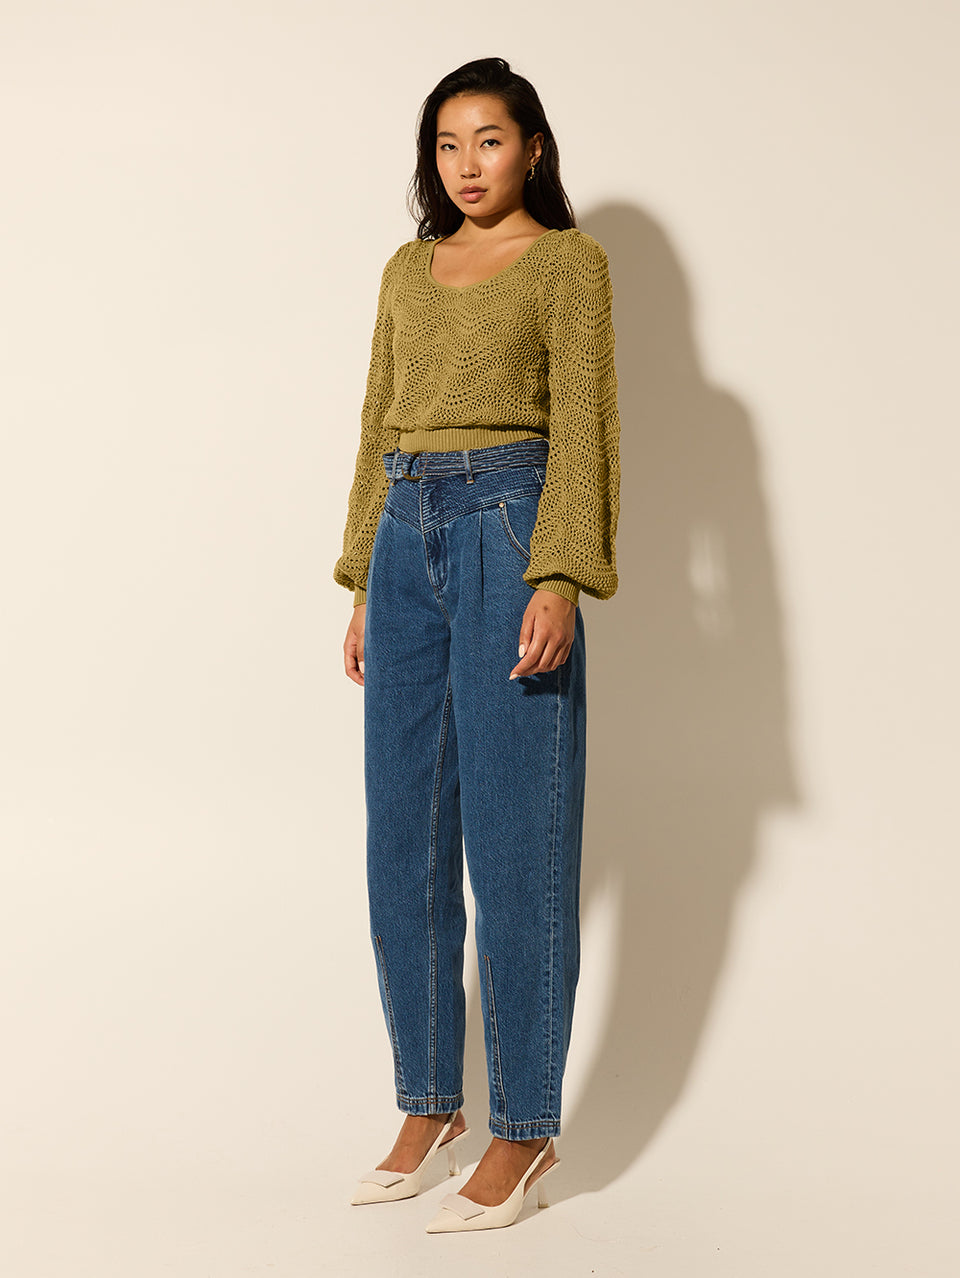 Mariana Knit Top Khaki KIVARI | Model wears khaki knit top side view